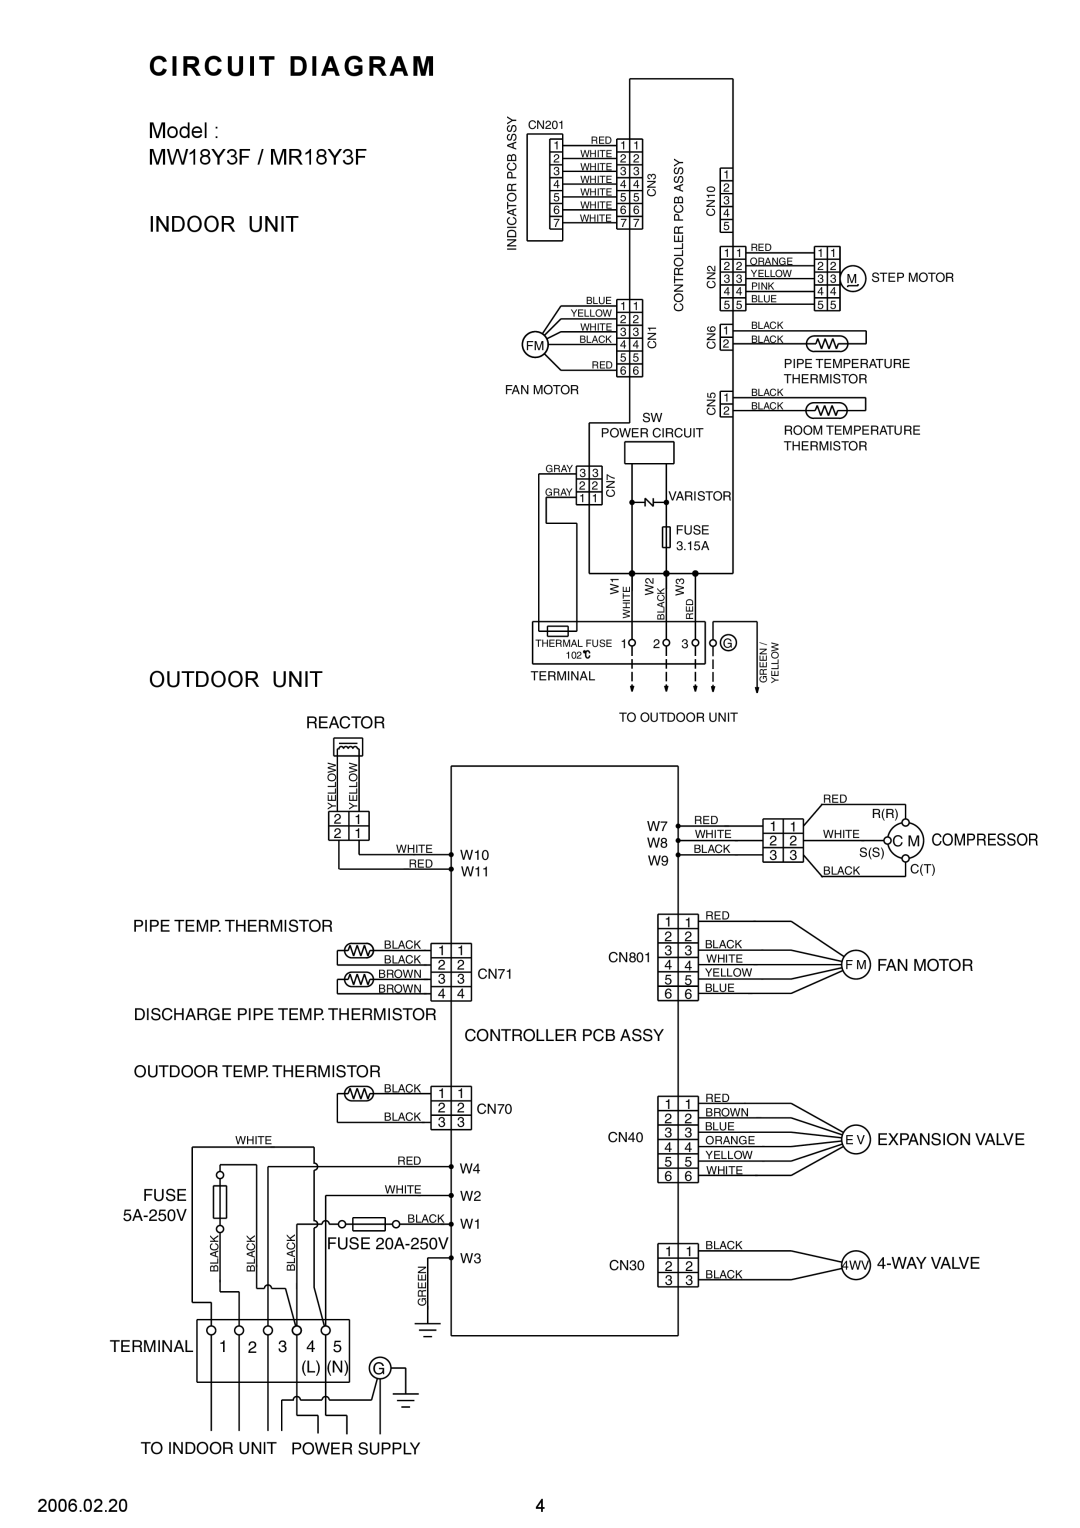 Friedrich specifications Circuit Diagram, Model MW18Y3F / MR18Y3F INDOOR UNIT, Outdoor Unit 